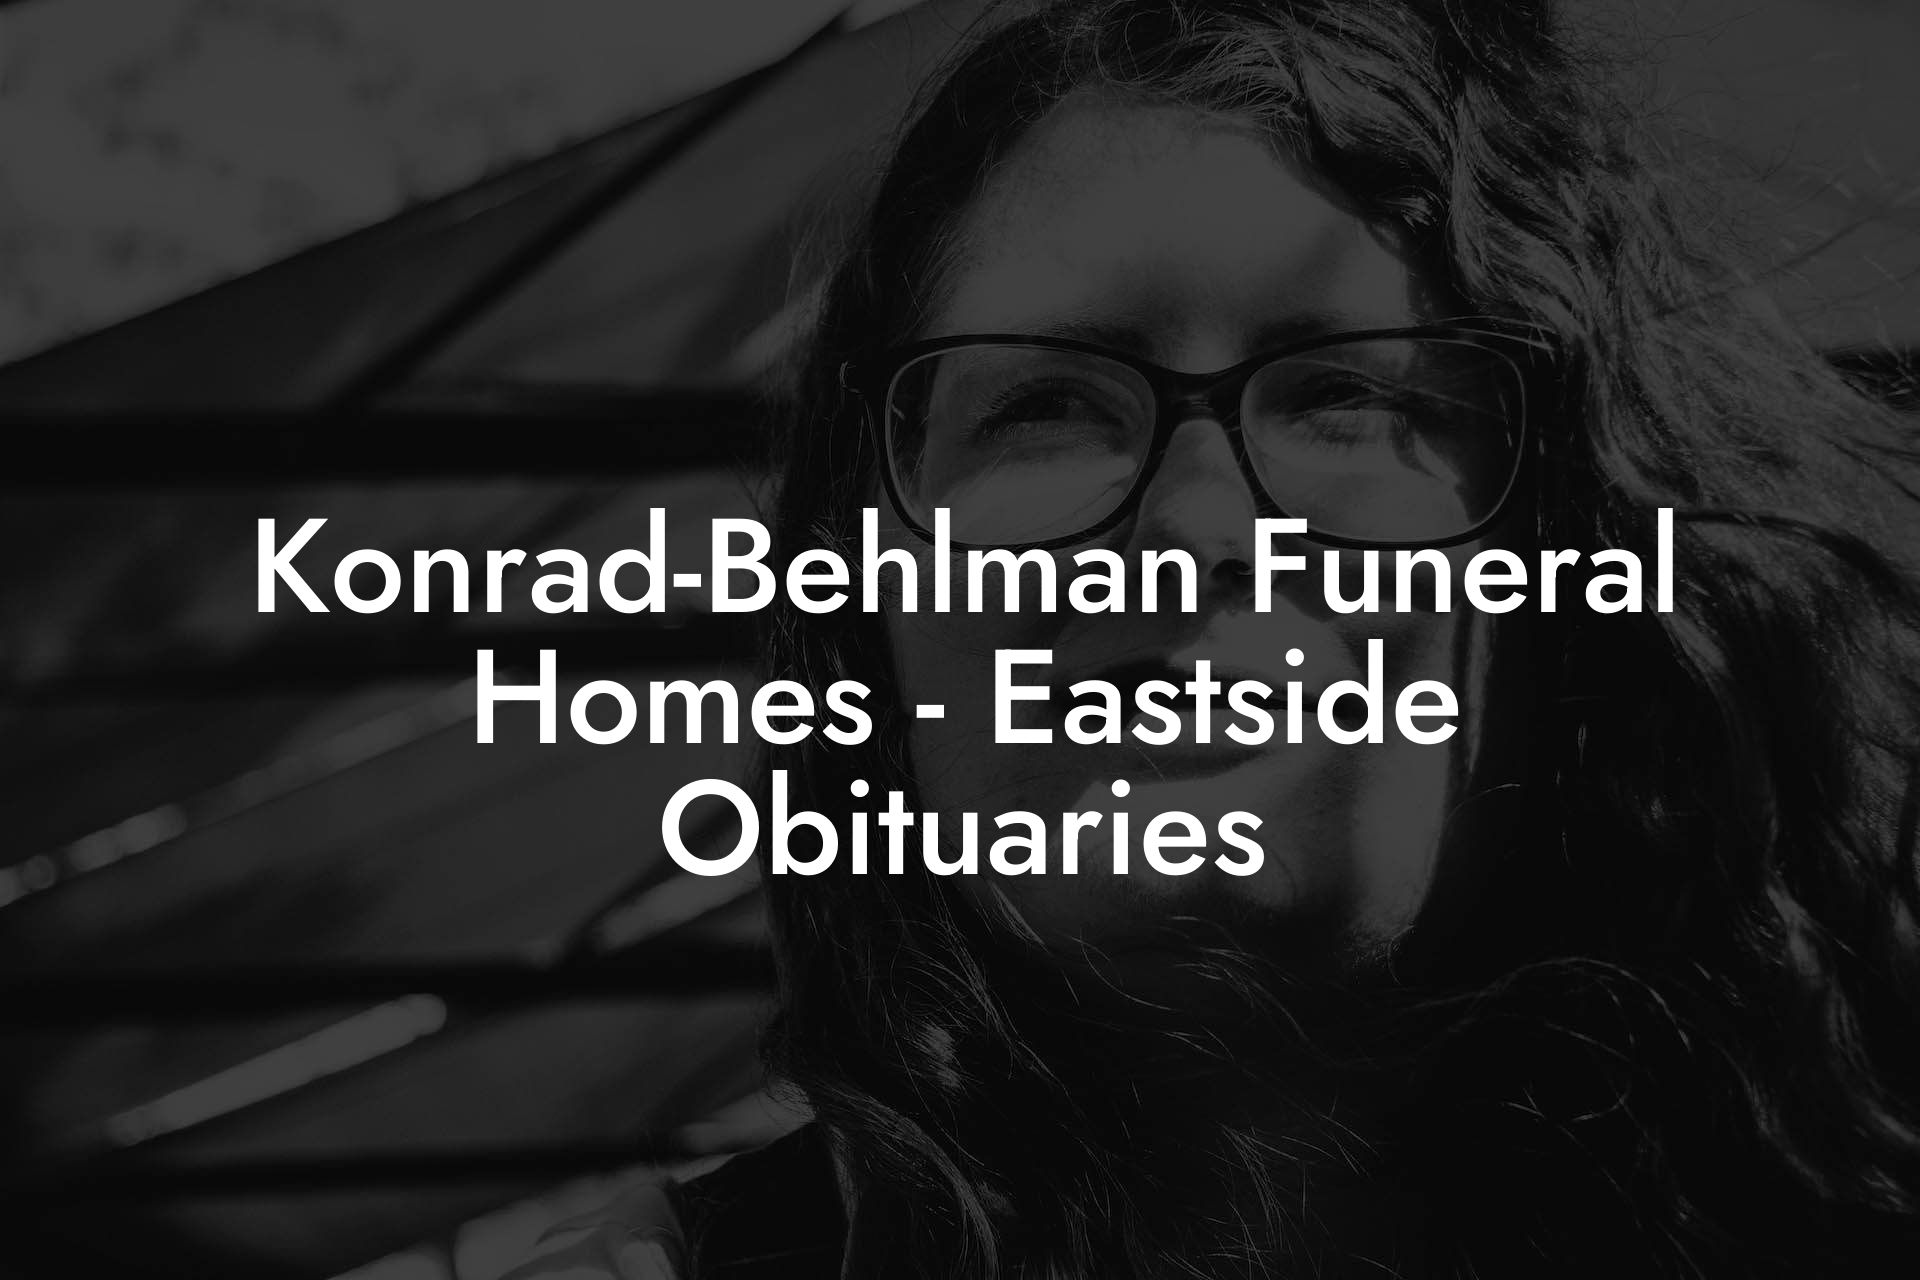 Konrad-Behlman Funeral Homes - Eastside Obituaries